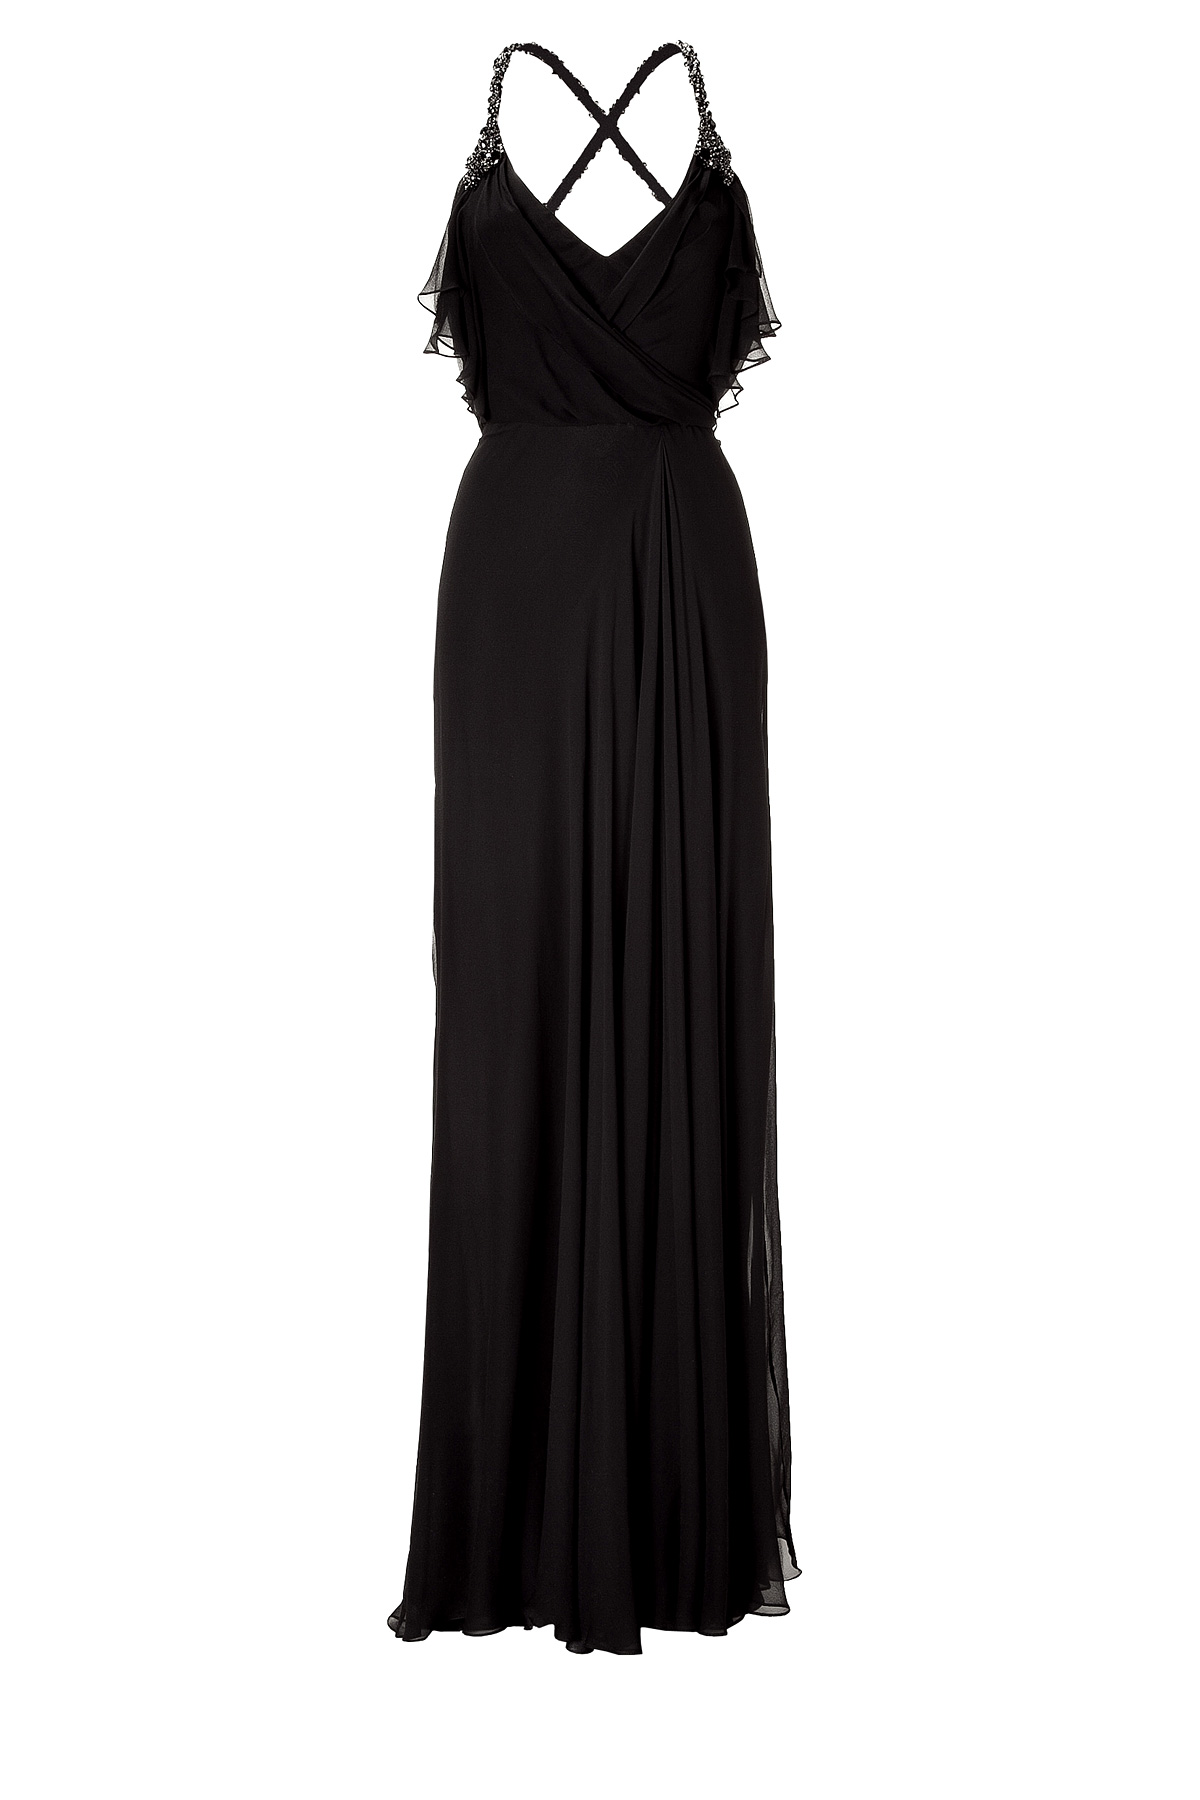 Lyst - Jenny Packham Black Crystal Embroidered Straps Dress in Black